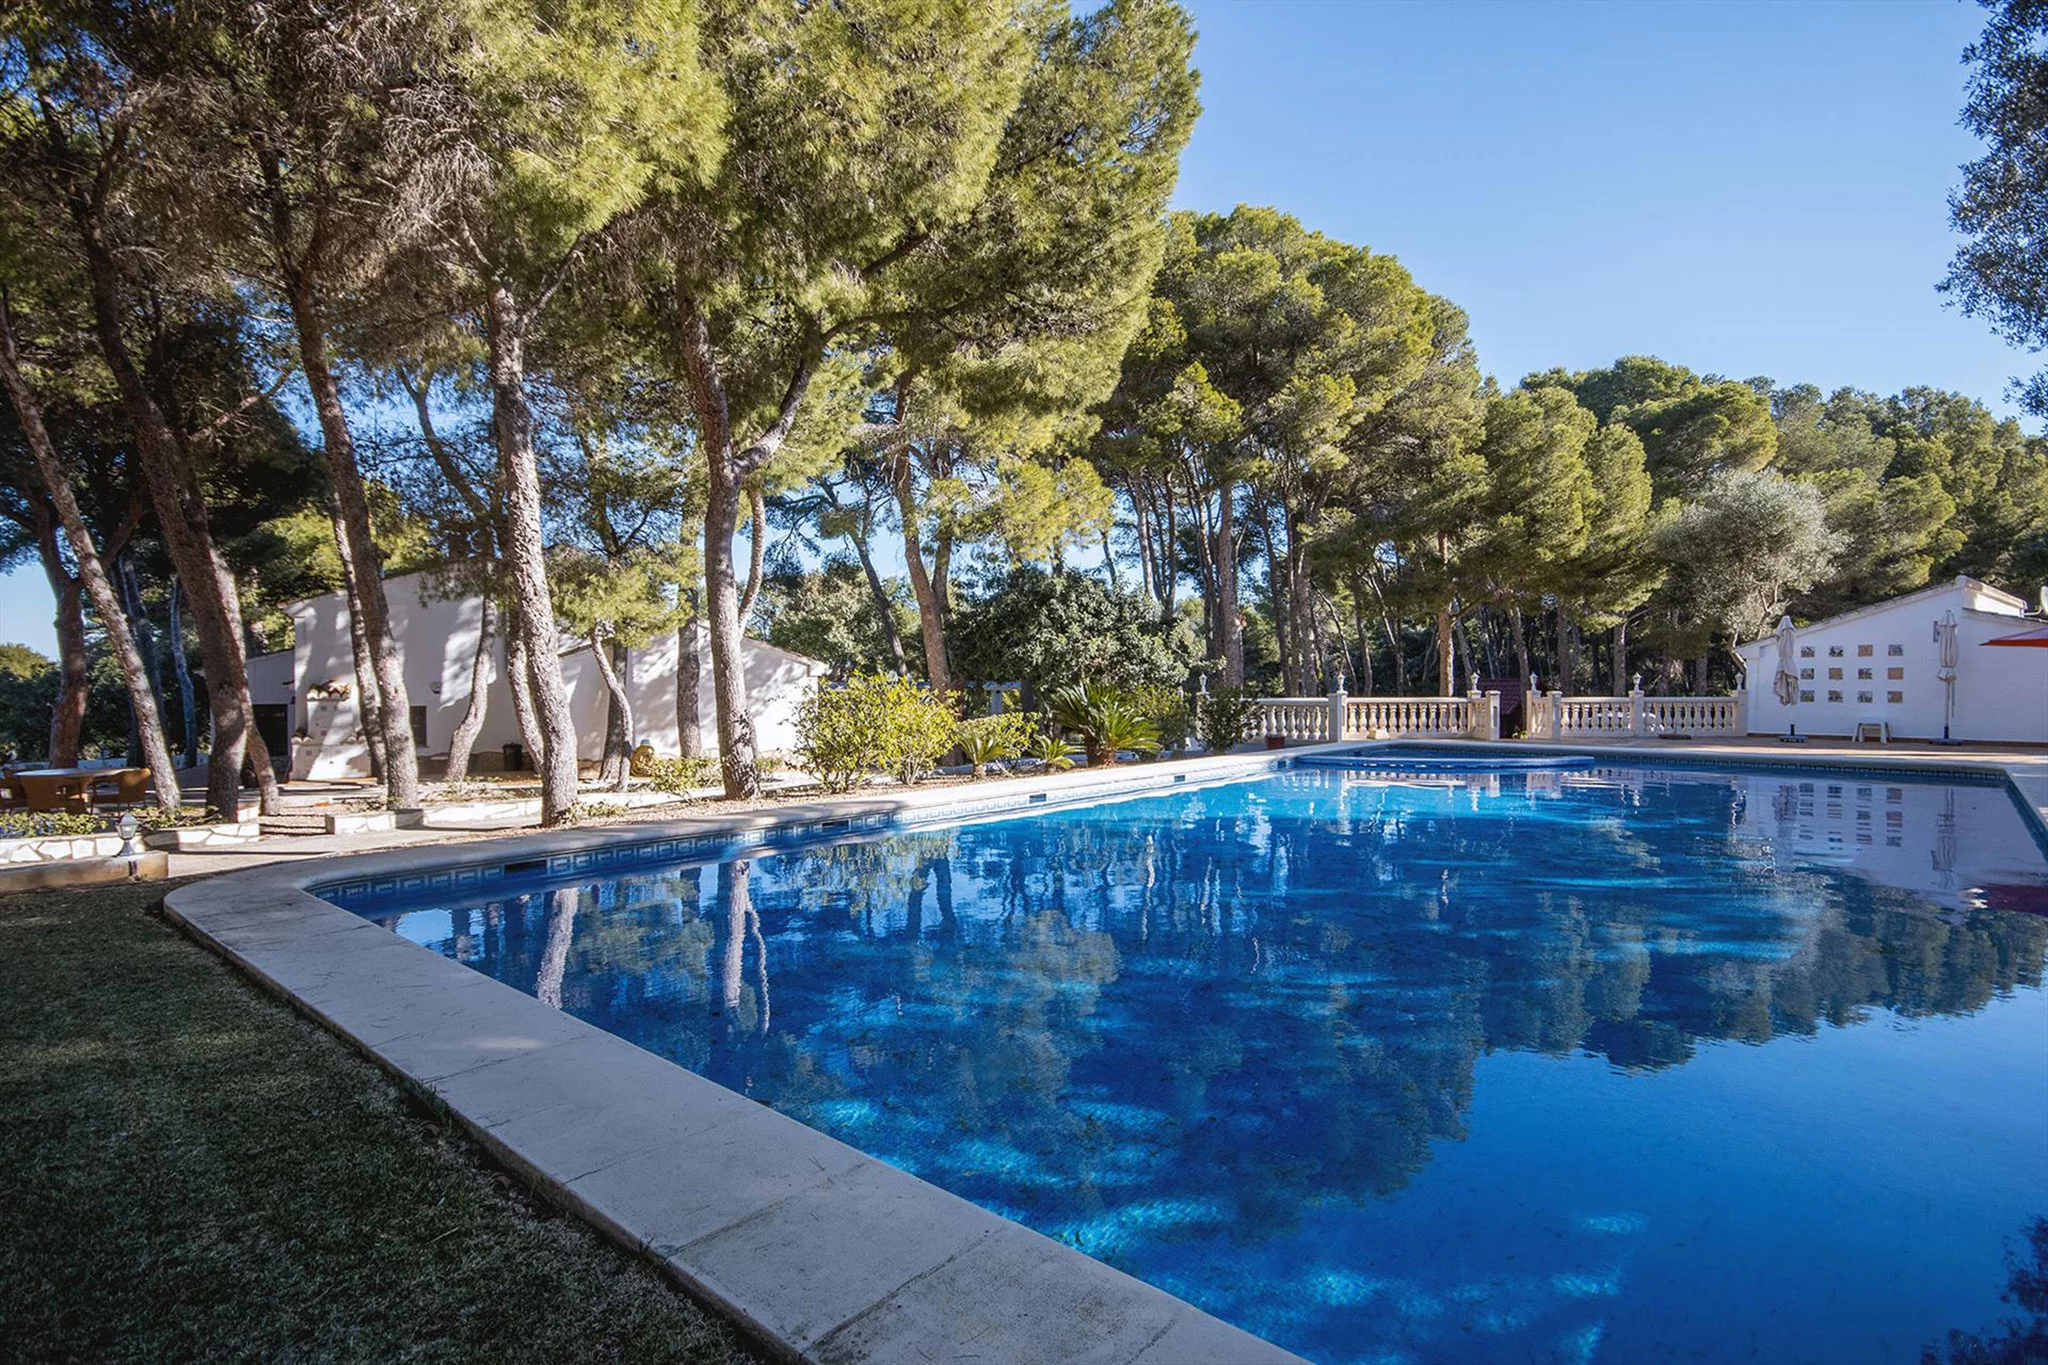 Piscina en una casa grande de vacaciones en Dénia – Aguila Rent a Villa